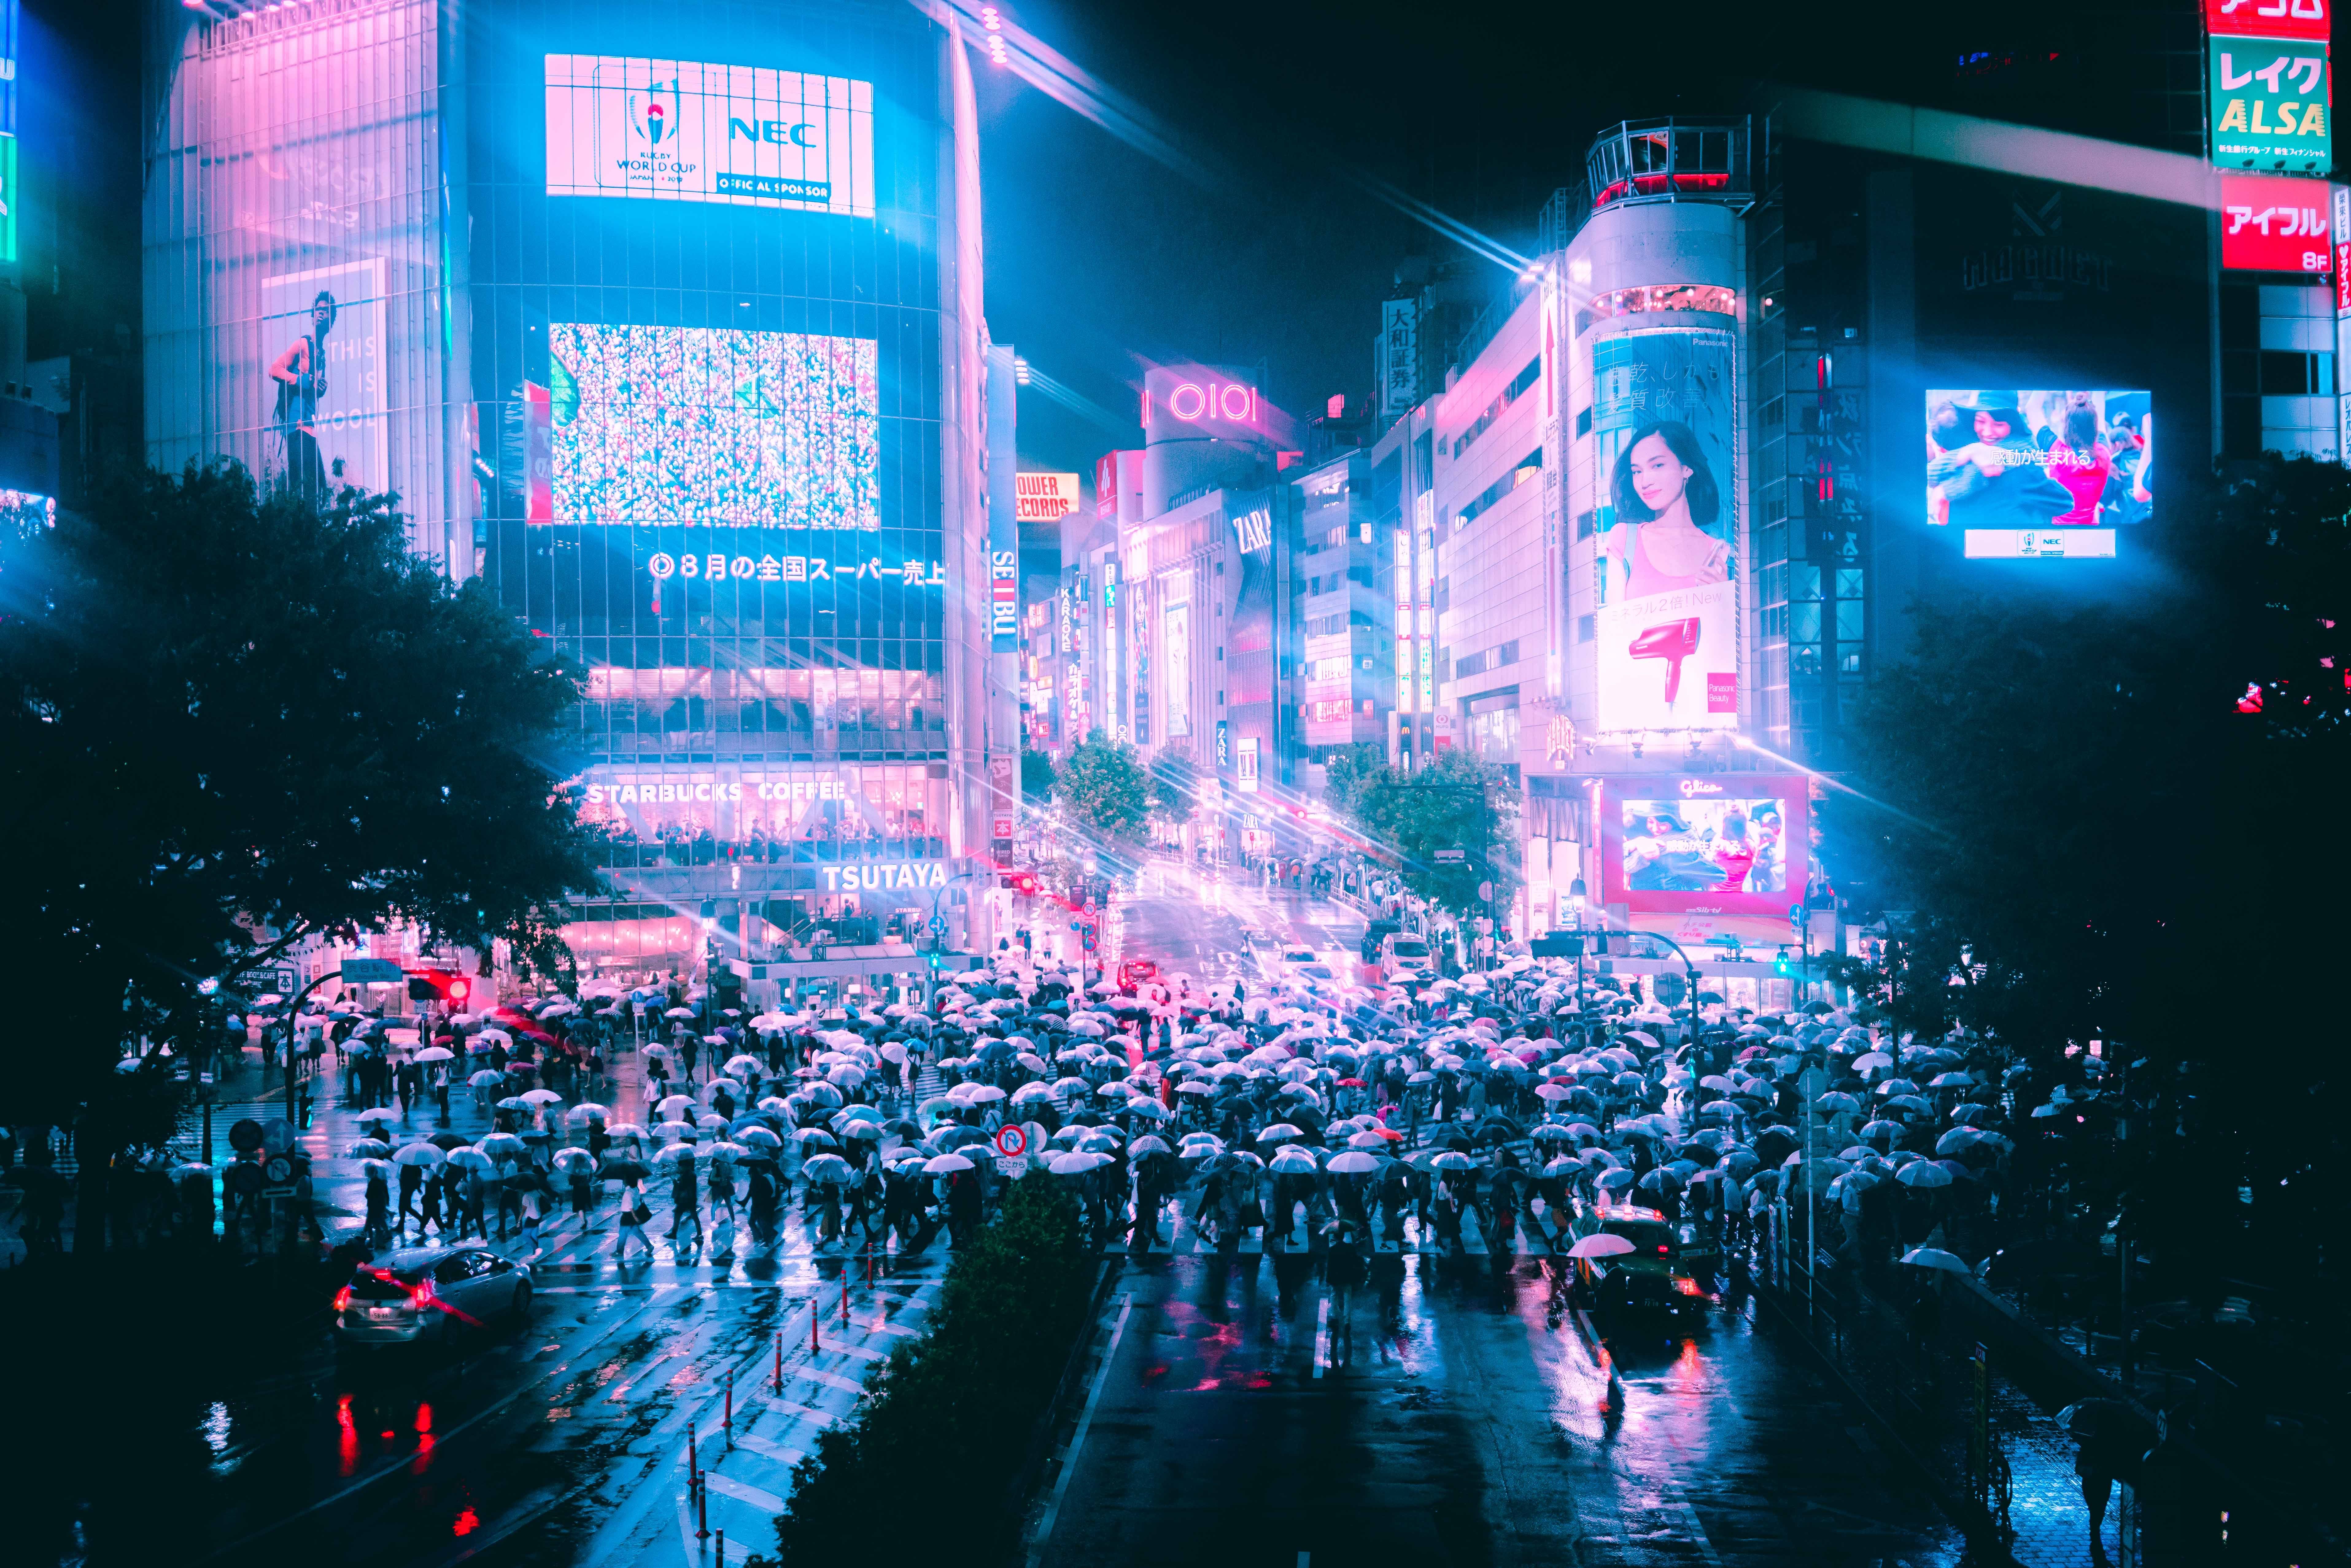 7660x5109 #umbrella, #tokyo, #neon, #crowd, #manga, #cyberpunk, #Creative Commons image, #street, #city, #rain, #bright, #japan, #urban, #weather, #night, #asium, #anime HD Wallpaper